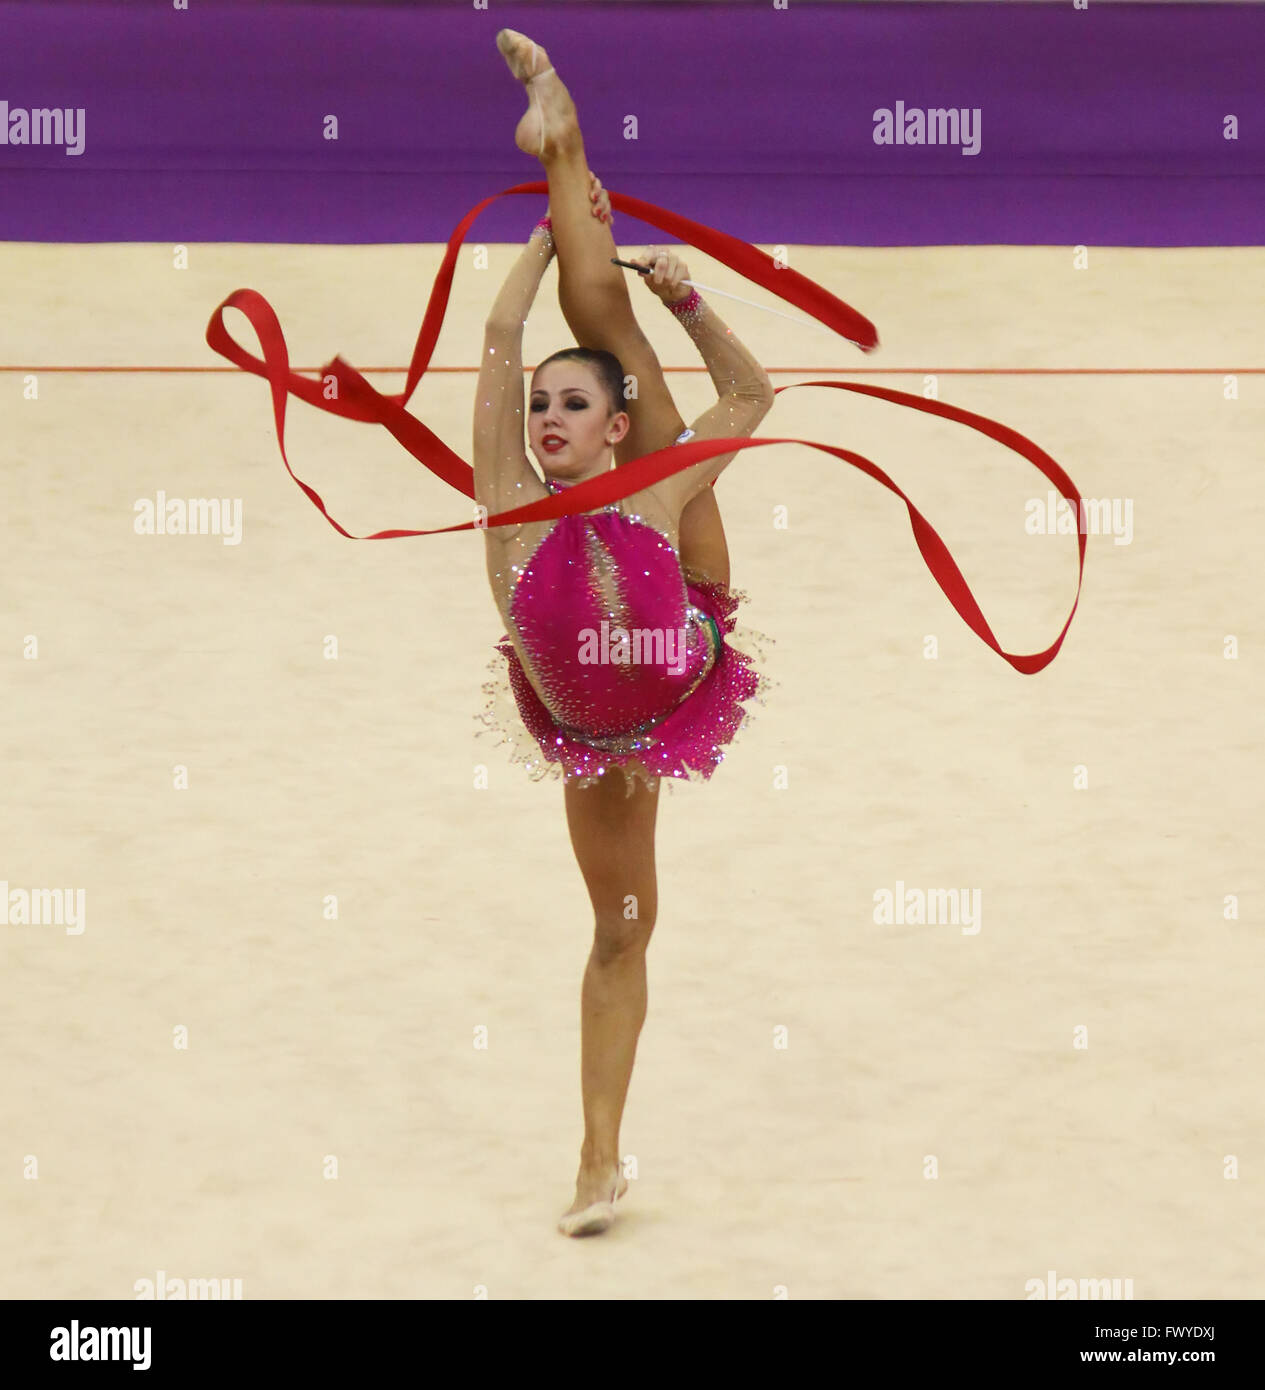 Rhythmic gymnastics ribbon hi-res stock photography and images